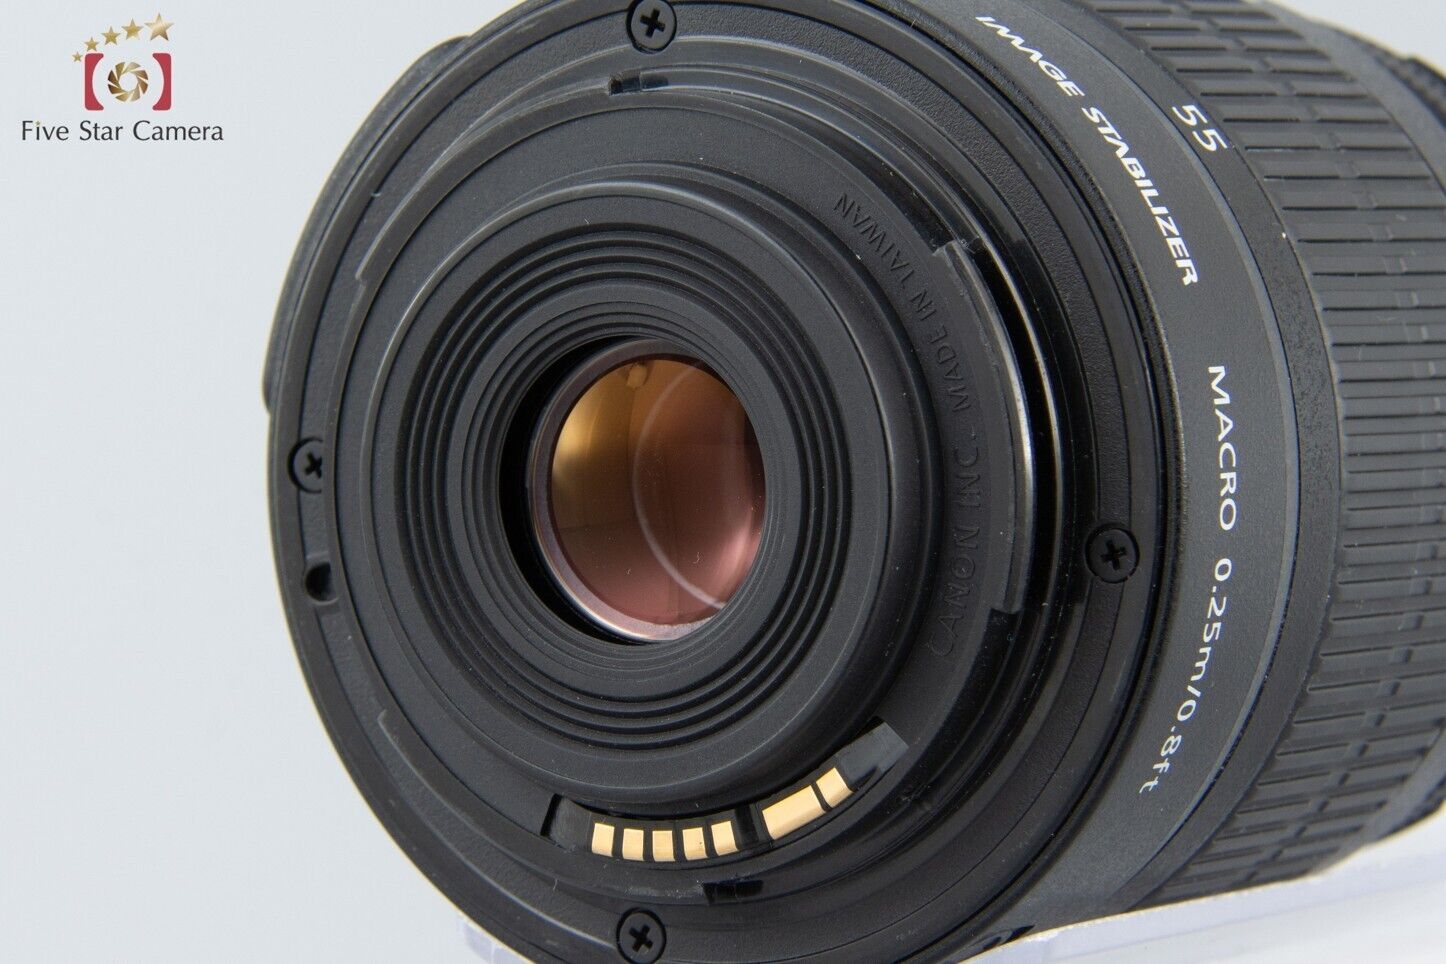 Very Good!! Canon EOS Kiss X80 / Rebal T6 / 1300D 18.0 MP DSLR 18-55mm Lens Kit